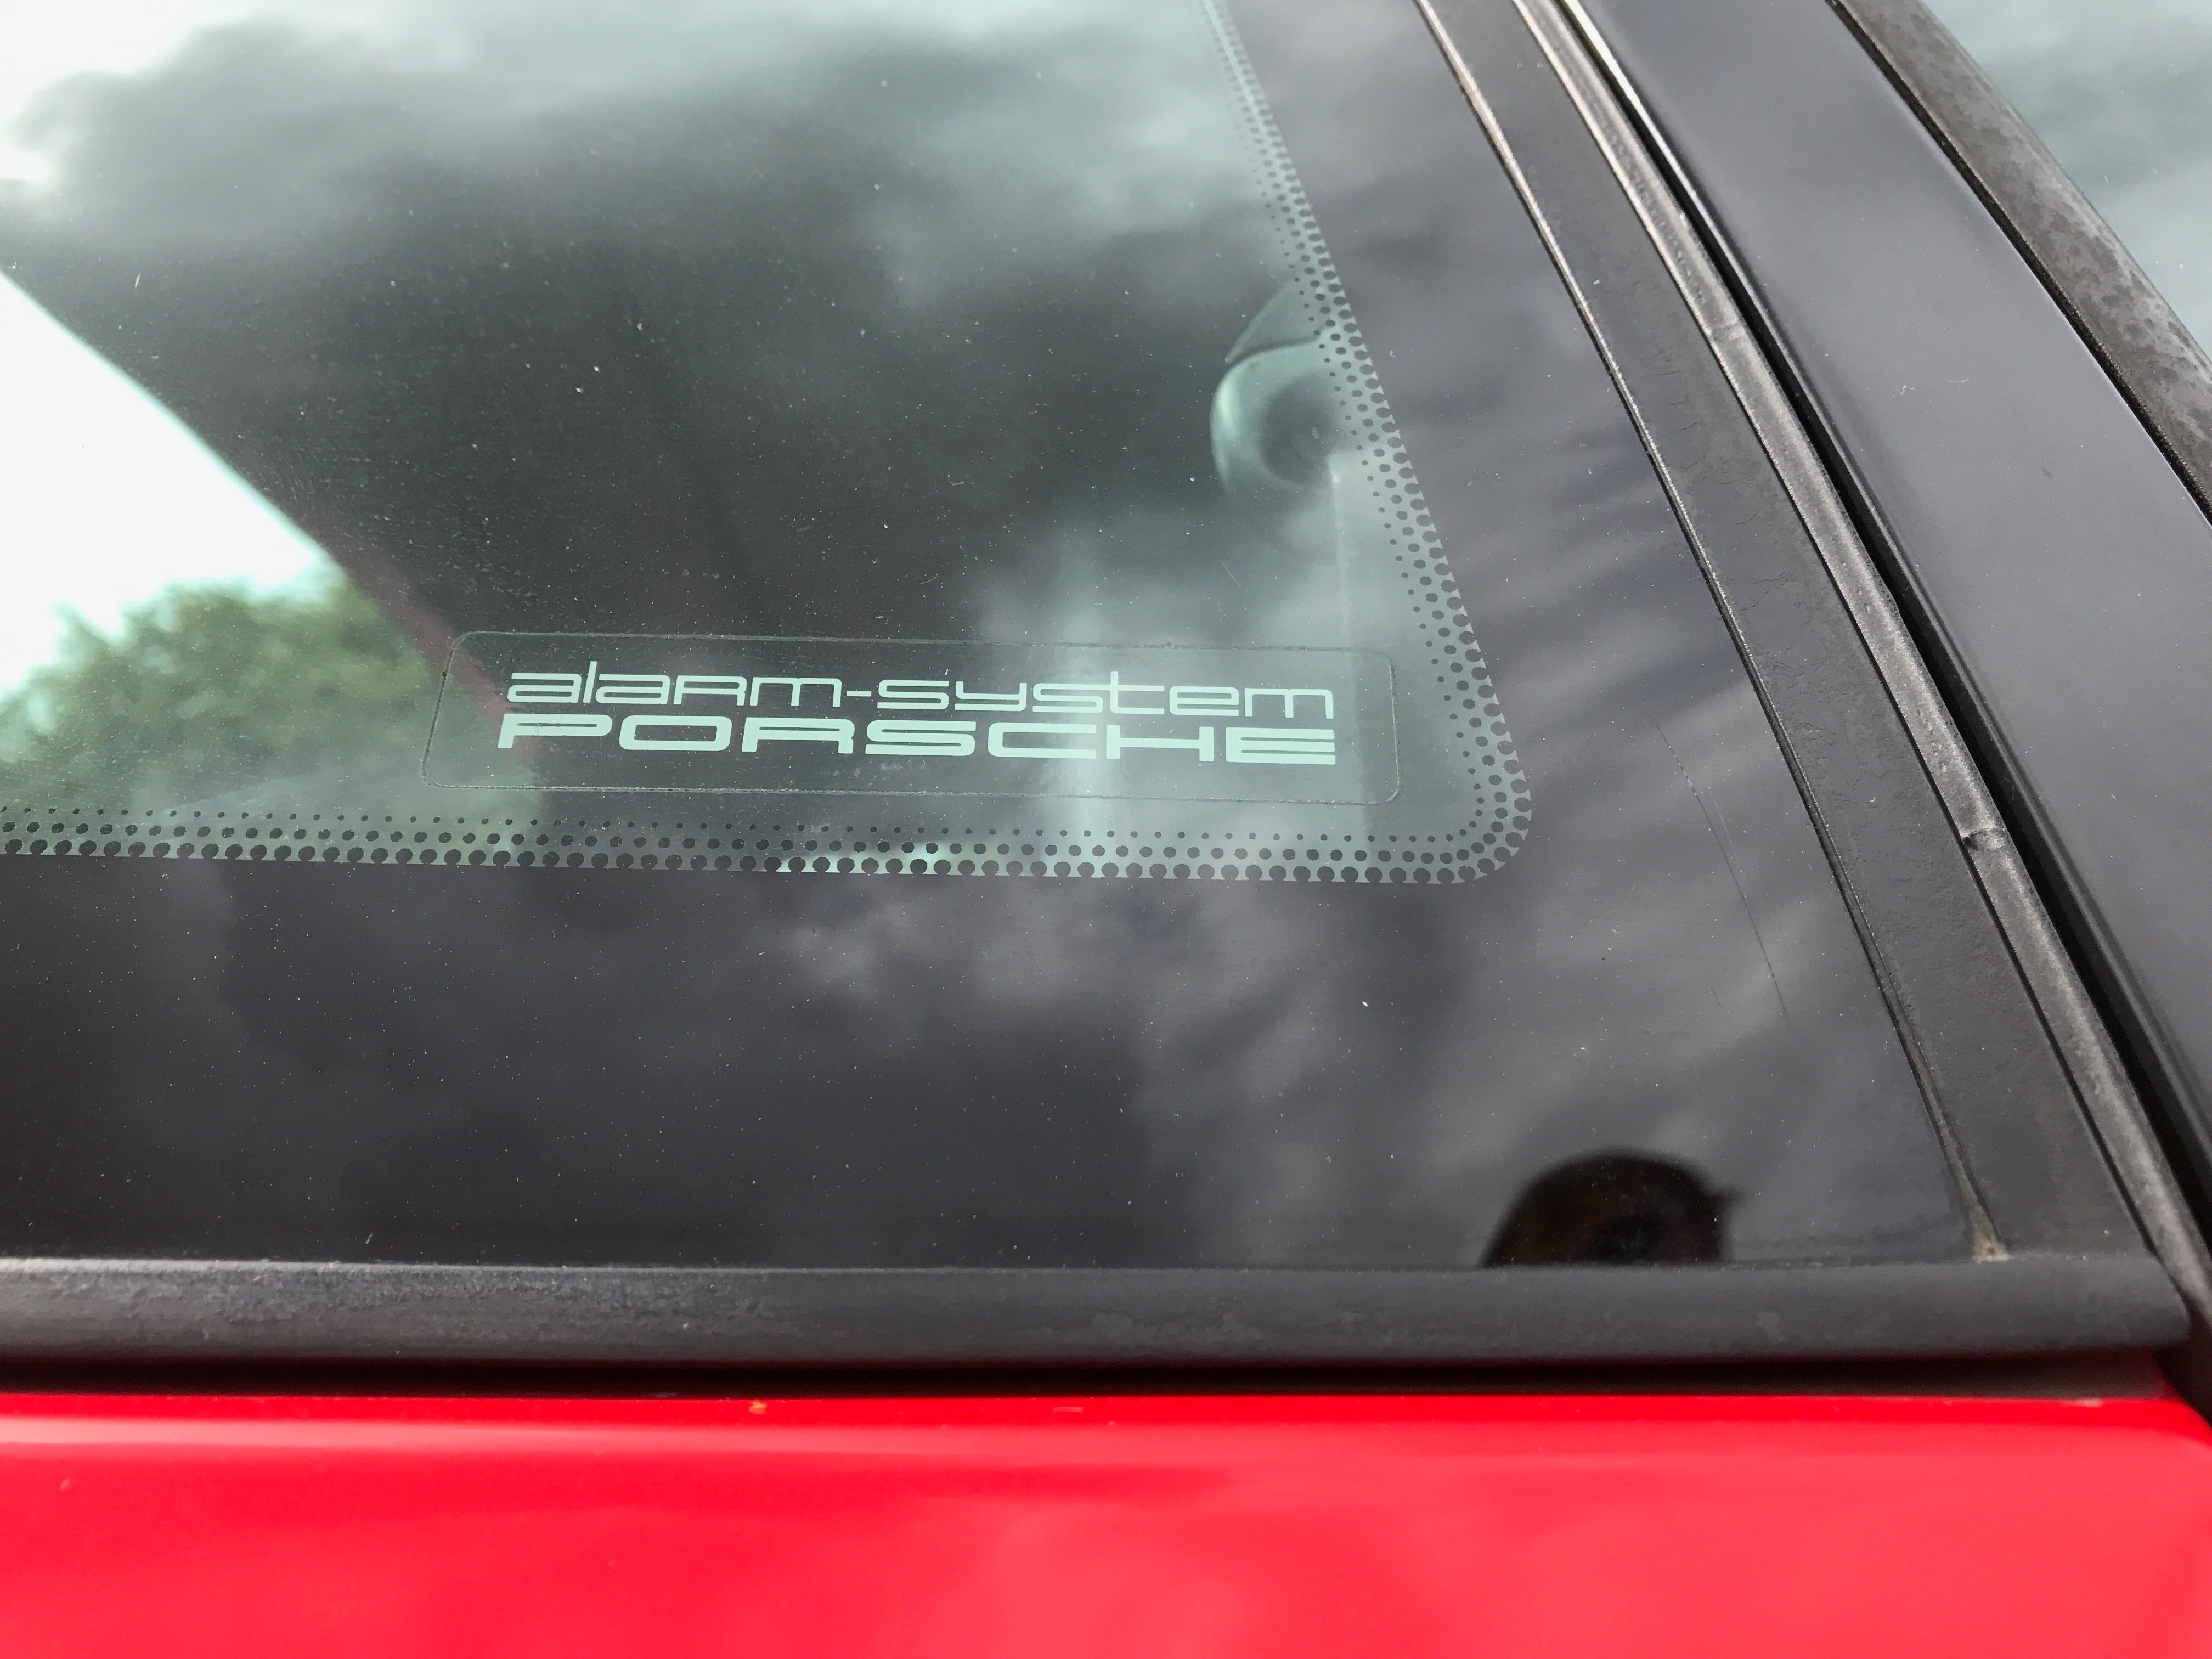 Official Porsche 2x 'Porsche Alarm System' Window Stickers for Porsche 924 Models